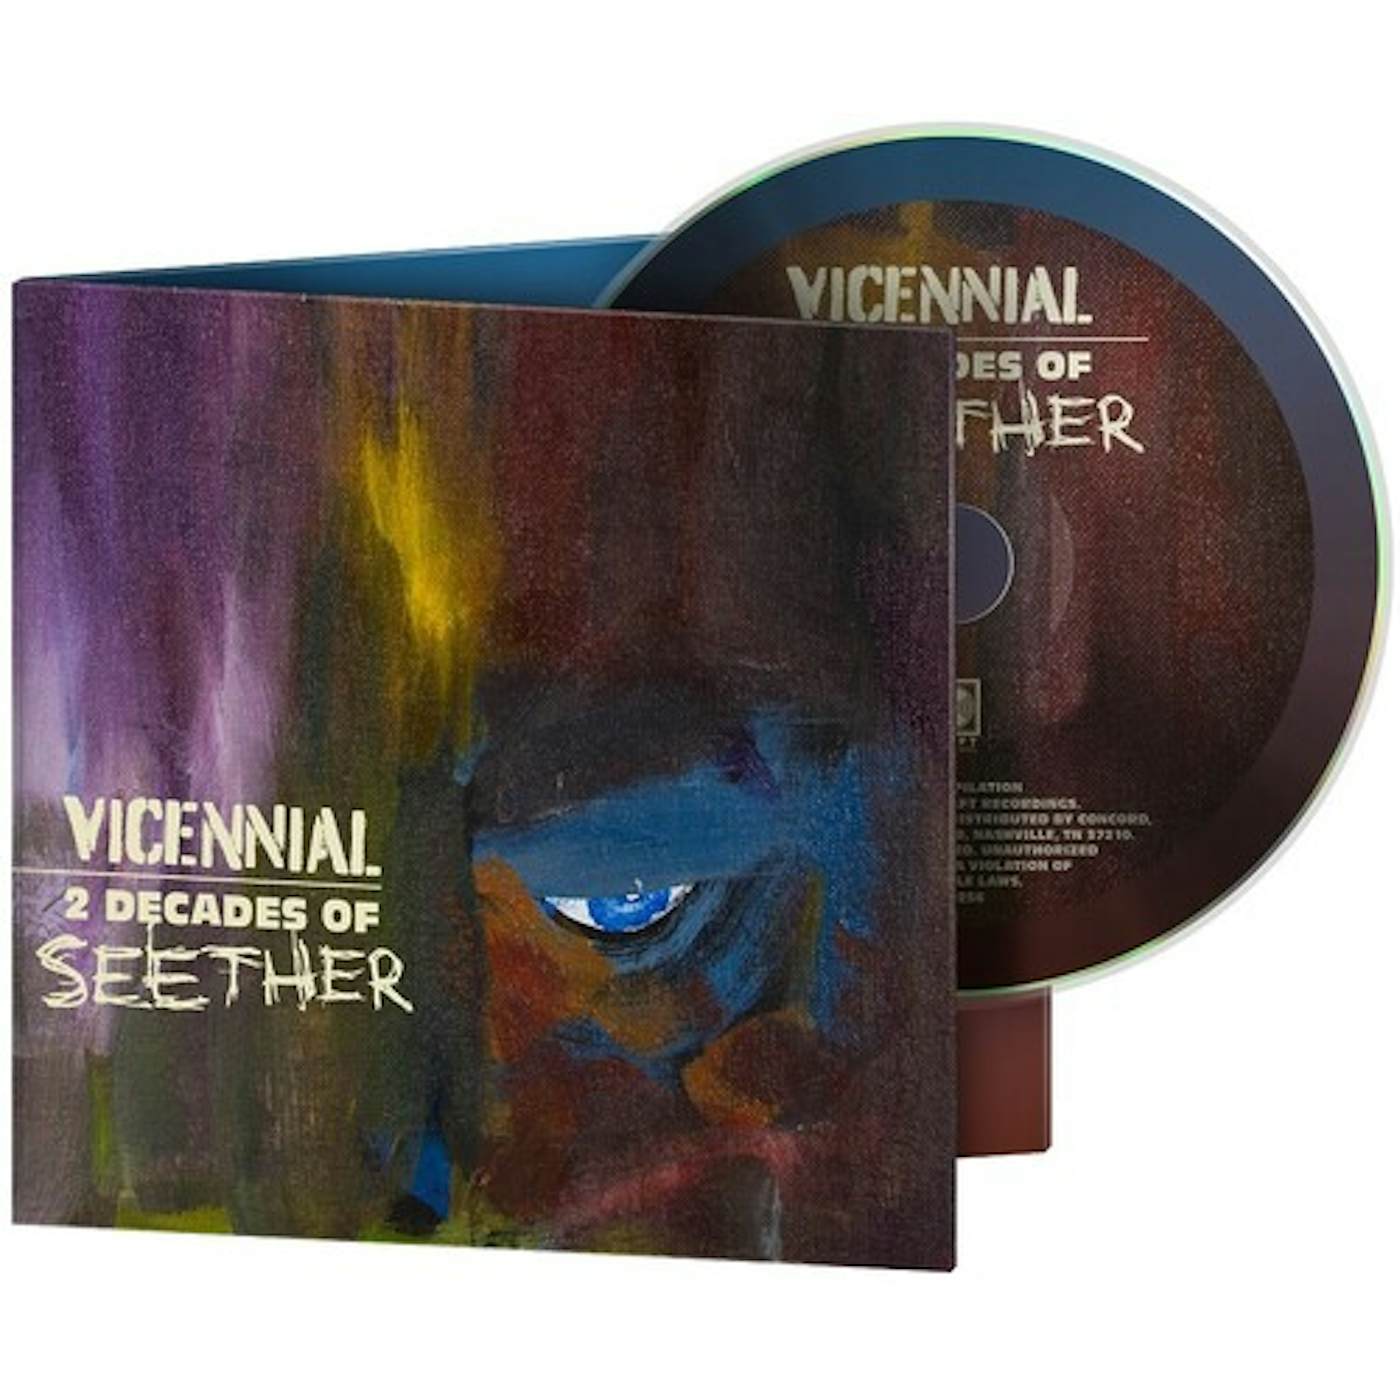 VICENNIAL: 2 DECADES OF SEETHER CD